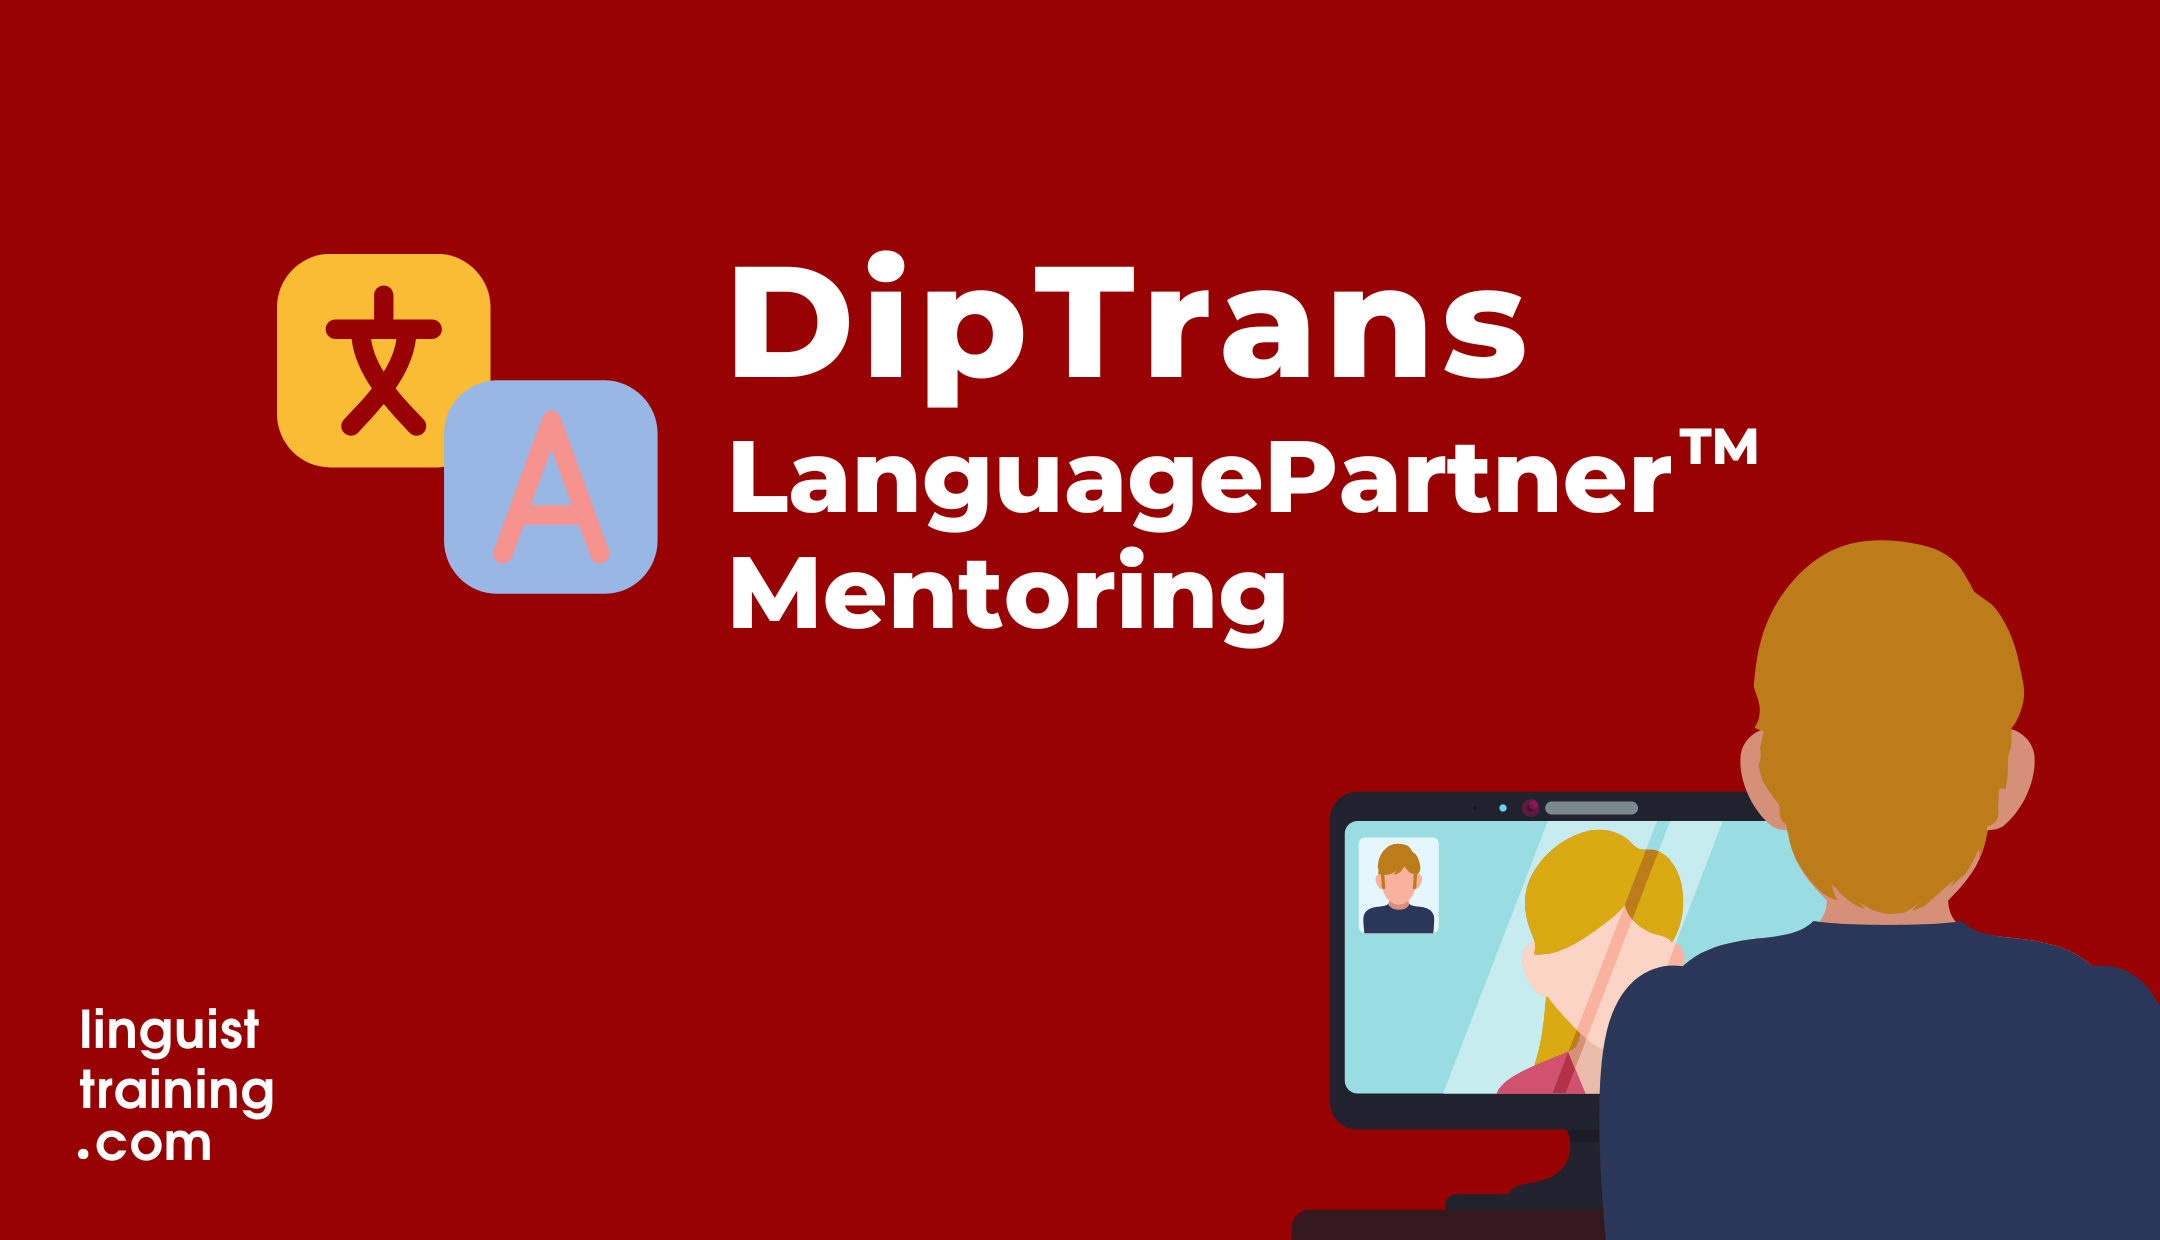 DipTrans LanguagePartner Mentoring (Video)